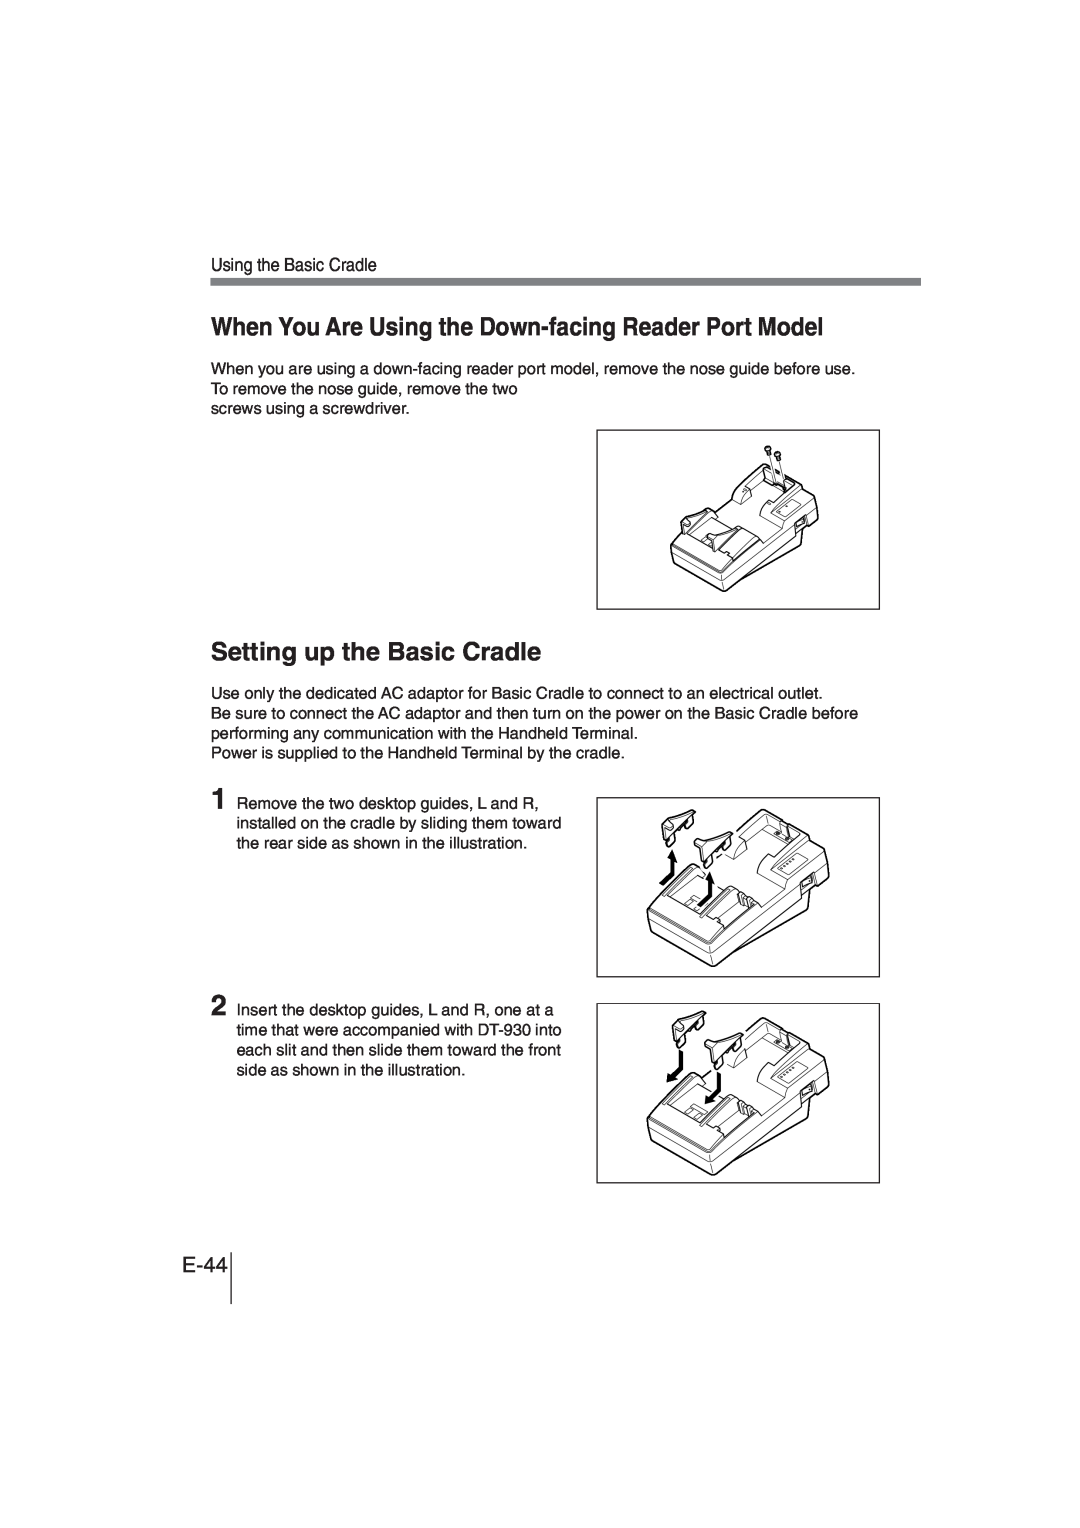 Casio DT-930 manual Setting up the Basic Cradle, E-44, Using the Basic Cradle 